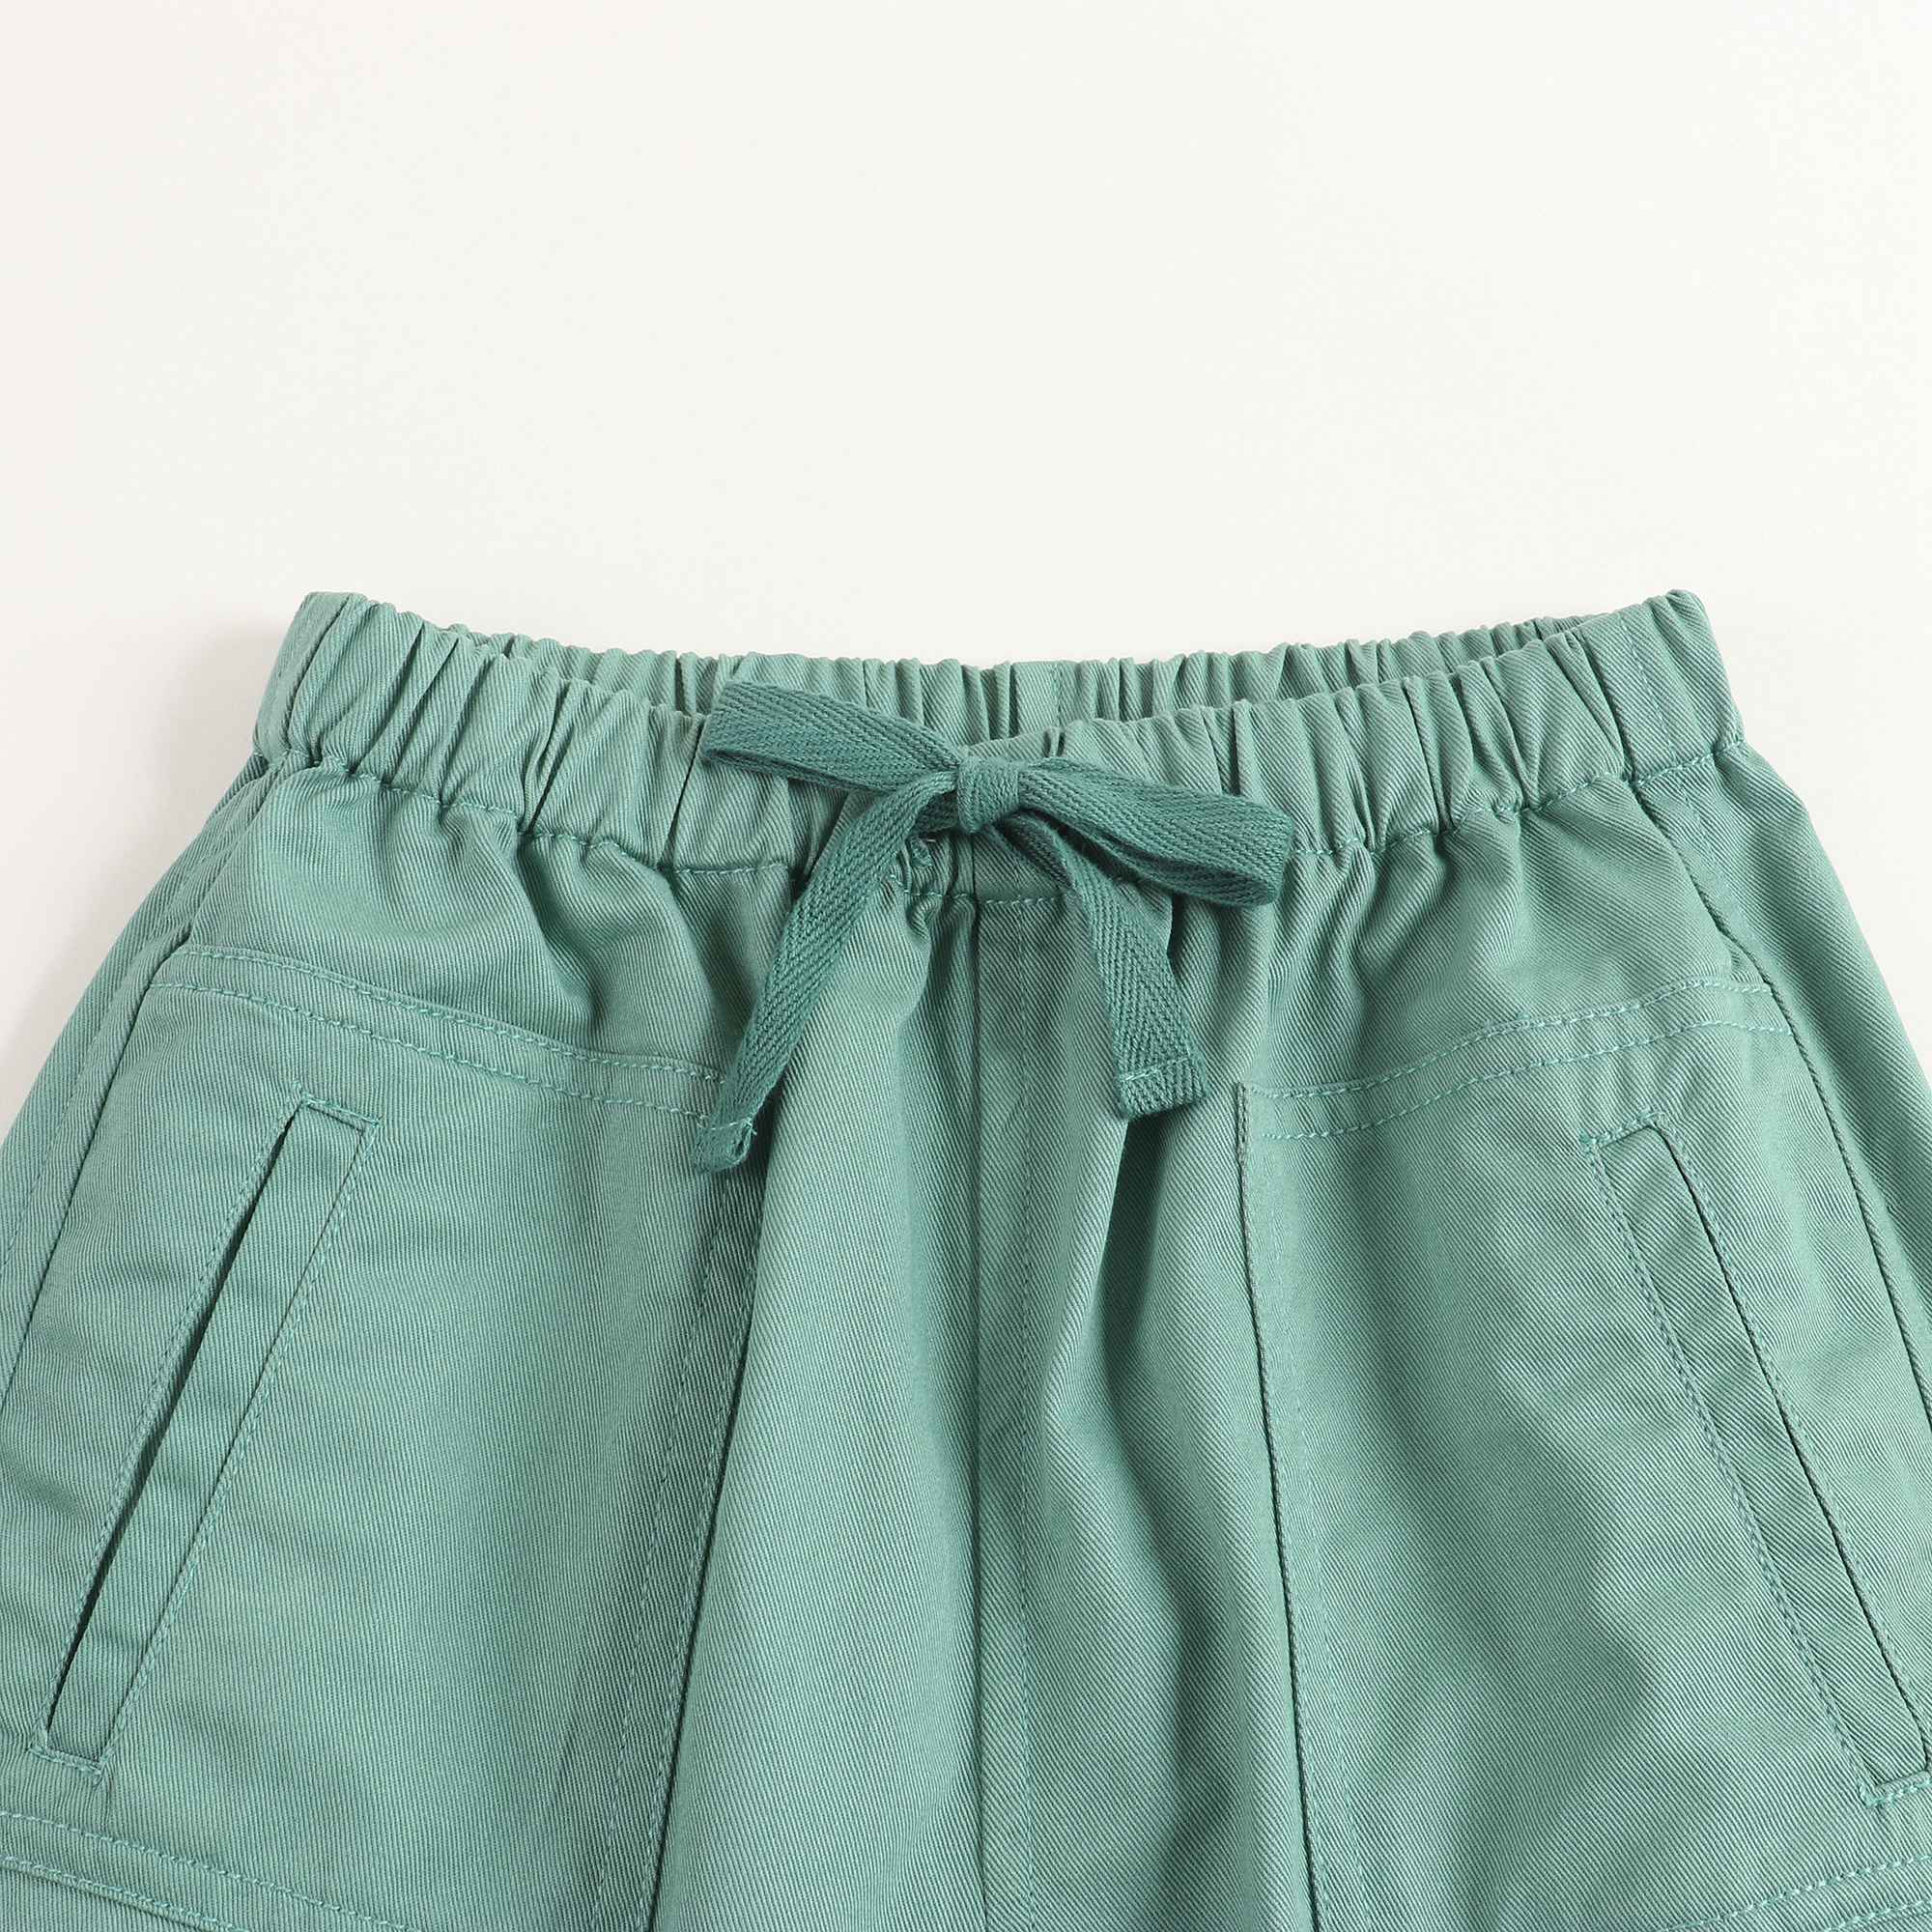 Boys &Girls Jade Cotton Trousers